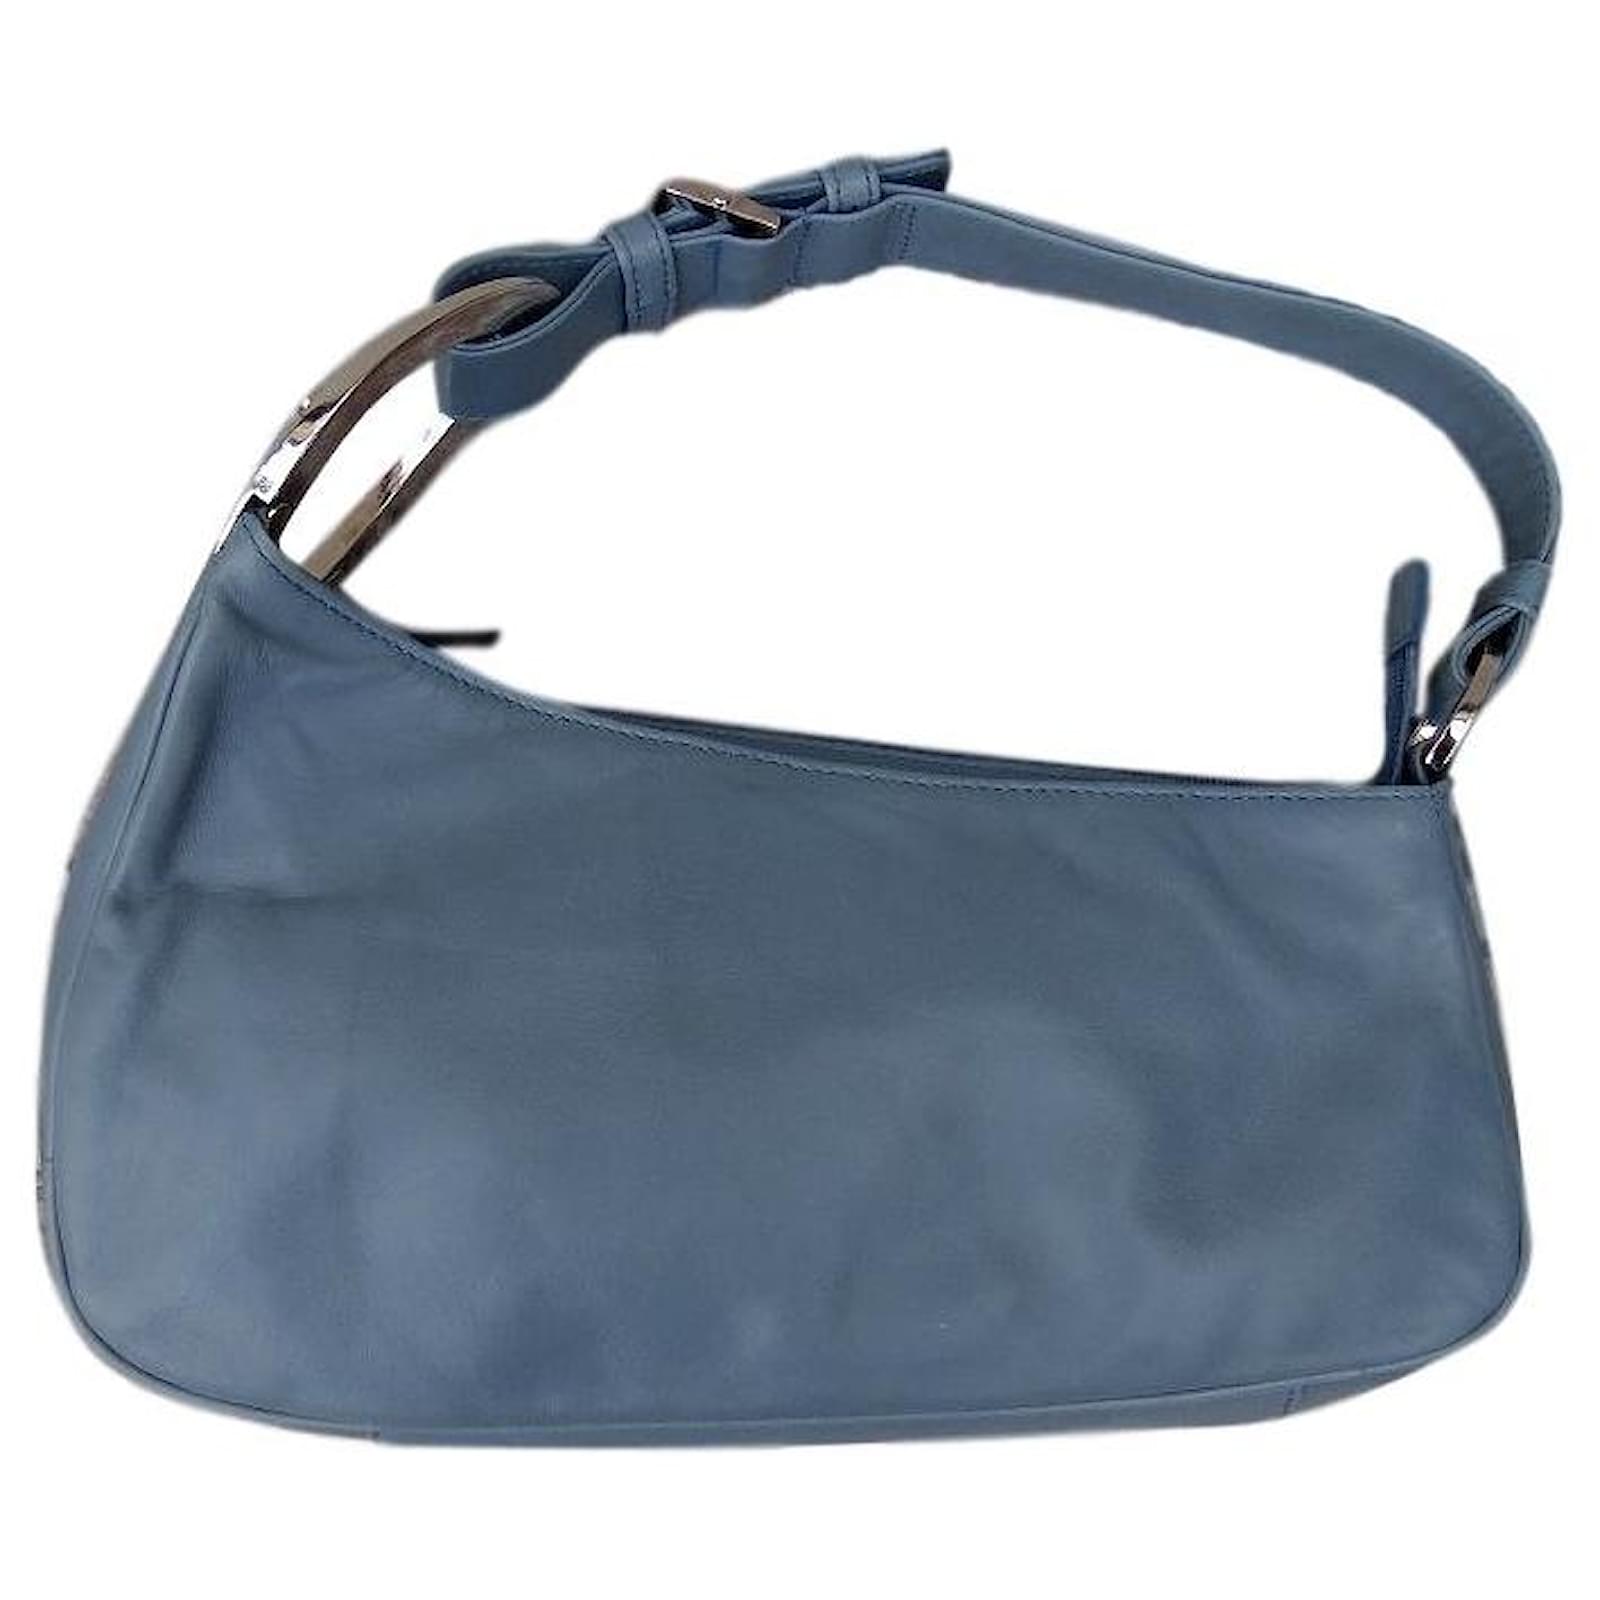 David Rossi bag is a classy bag in... - EL-Samad Textile | Facebook